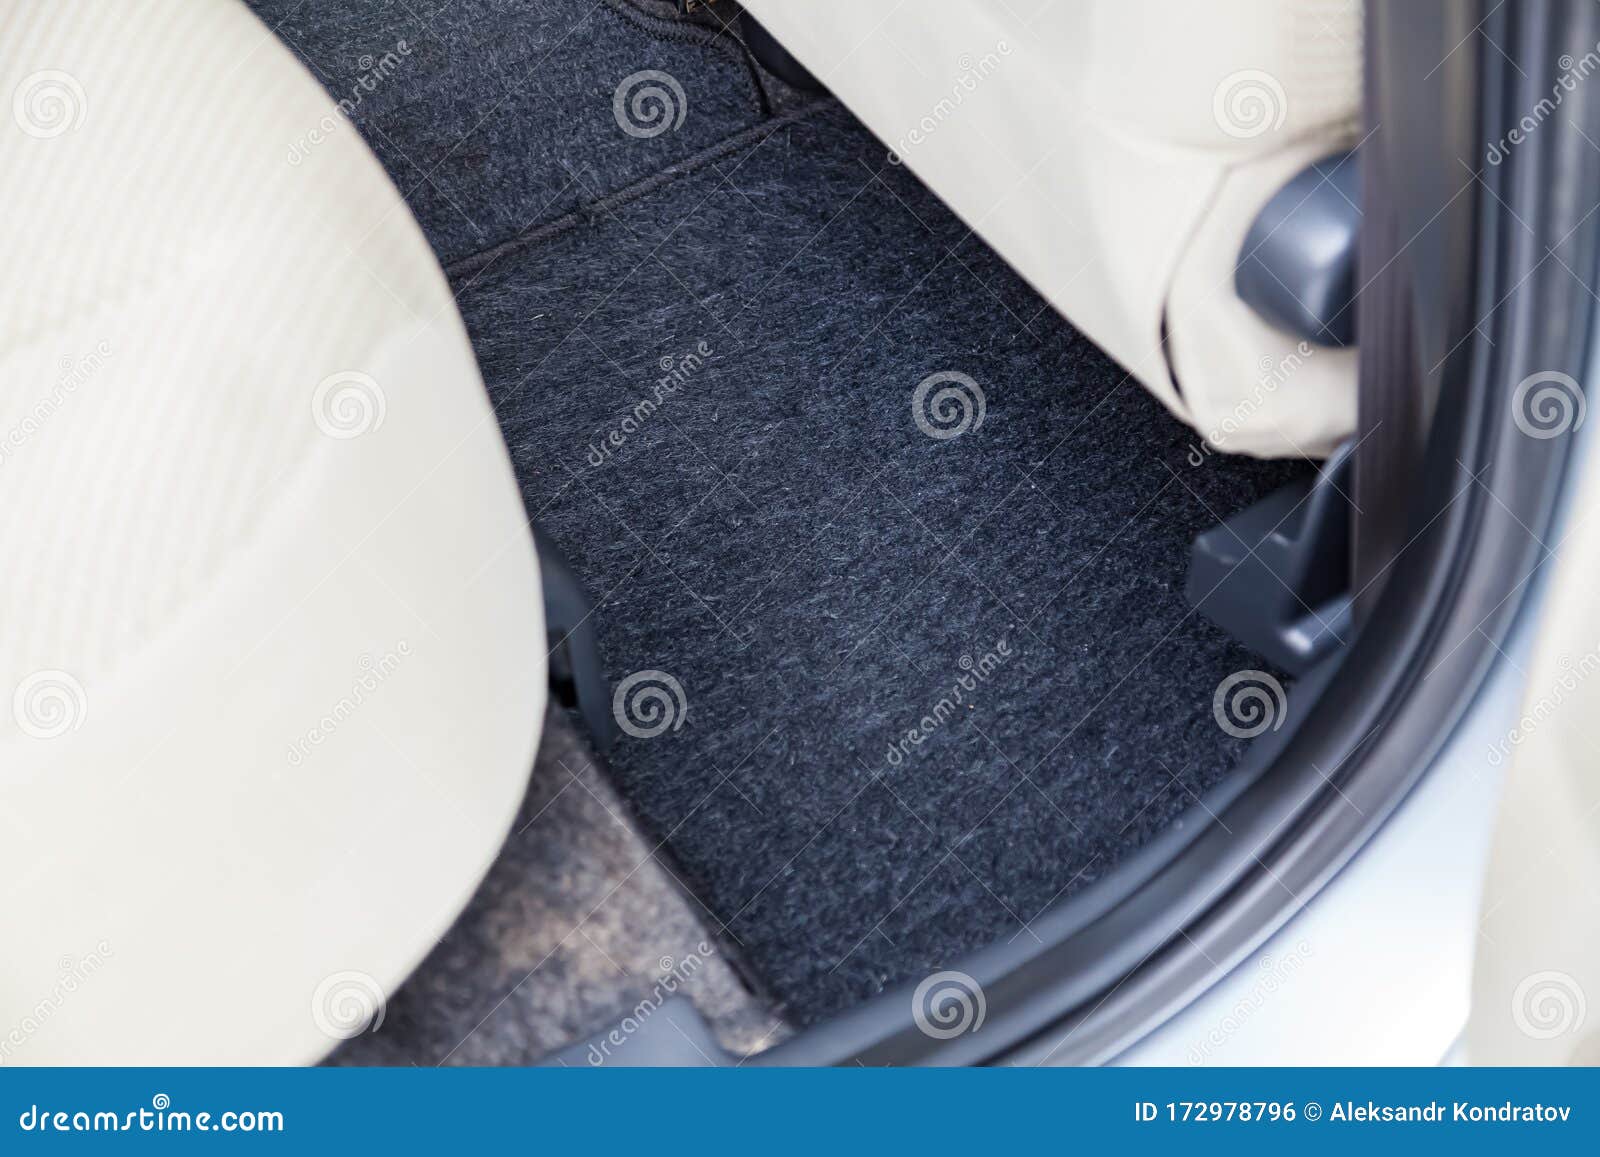 Clean Car Floor Mats Of Black Carpet Under Rear Passenger Seat In